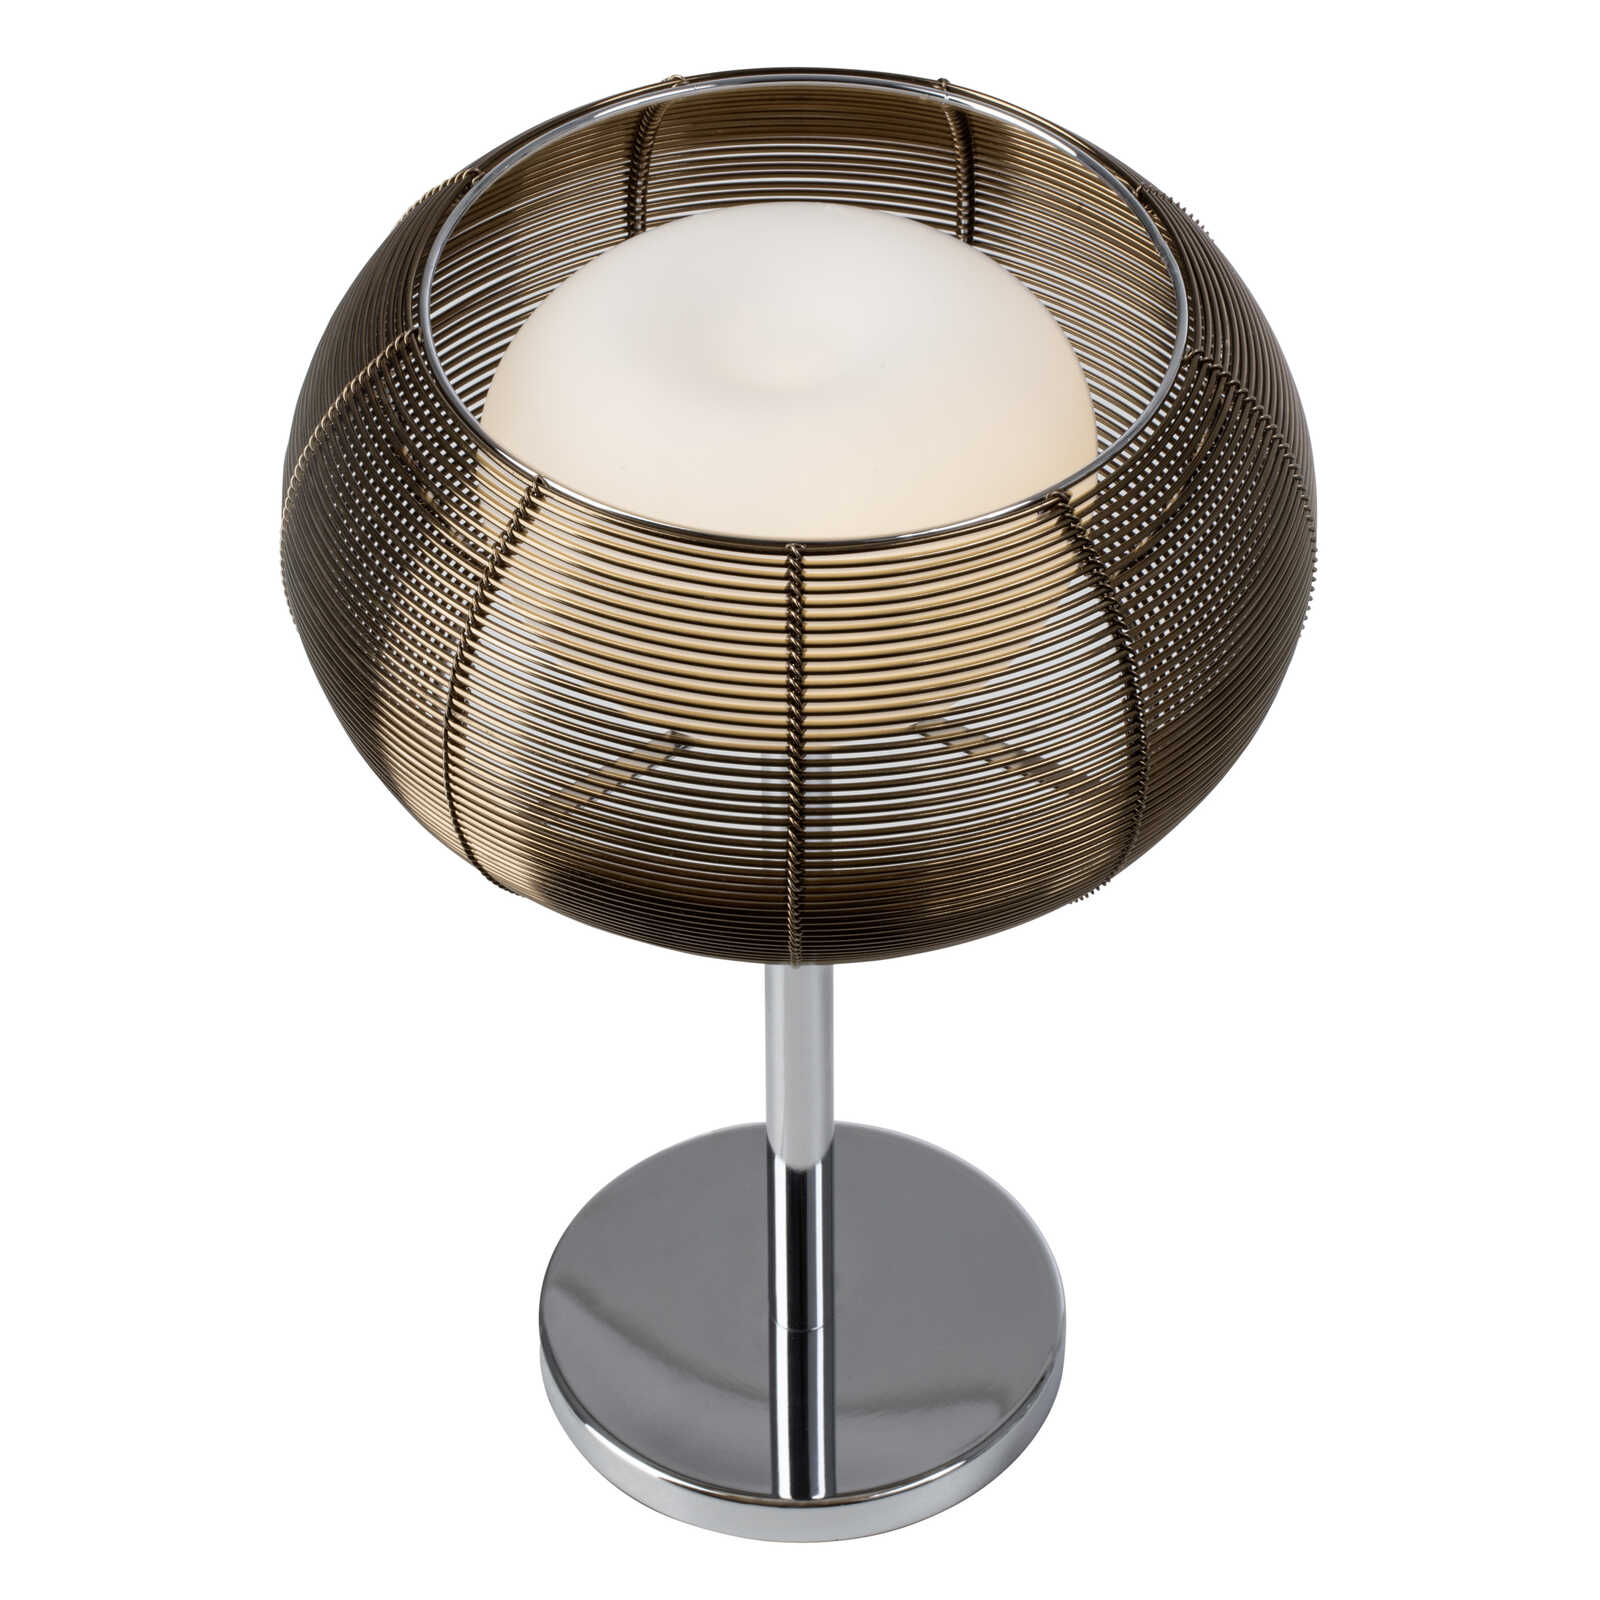             Lámpara de mesa de cristal - Maxime 4 - Marrón
        